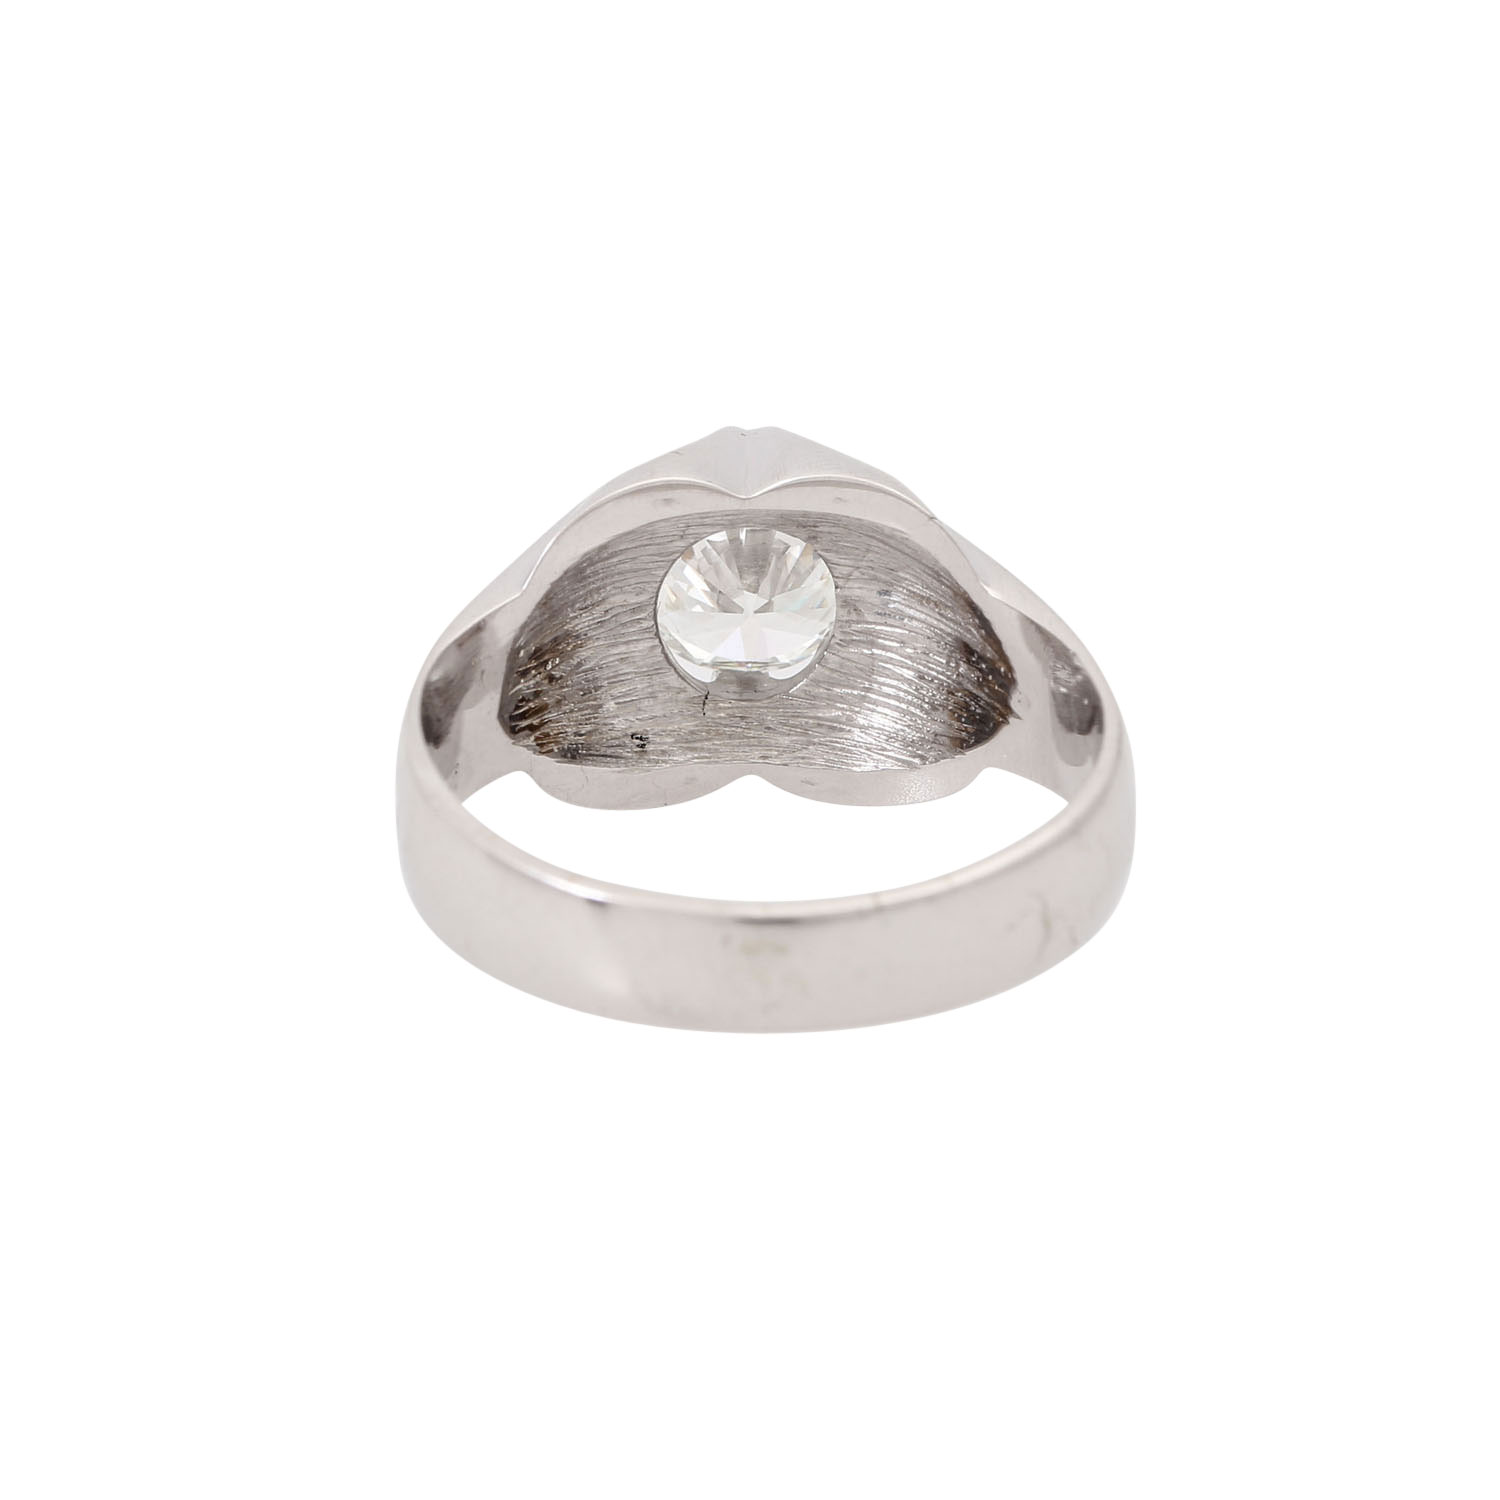 Ring mit Brillant ca. 1,46 ct, LGW (I)/IF, - Image 4 of 6